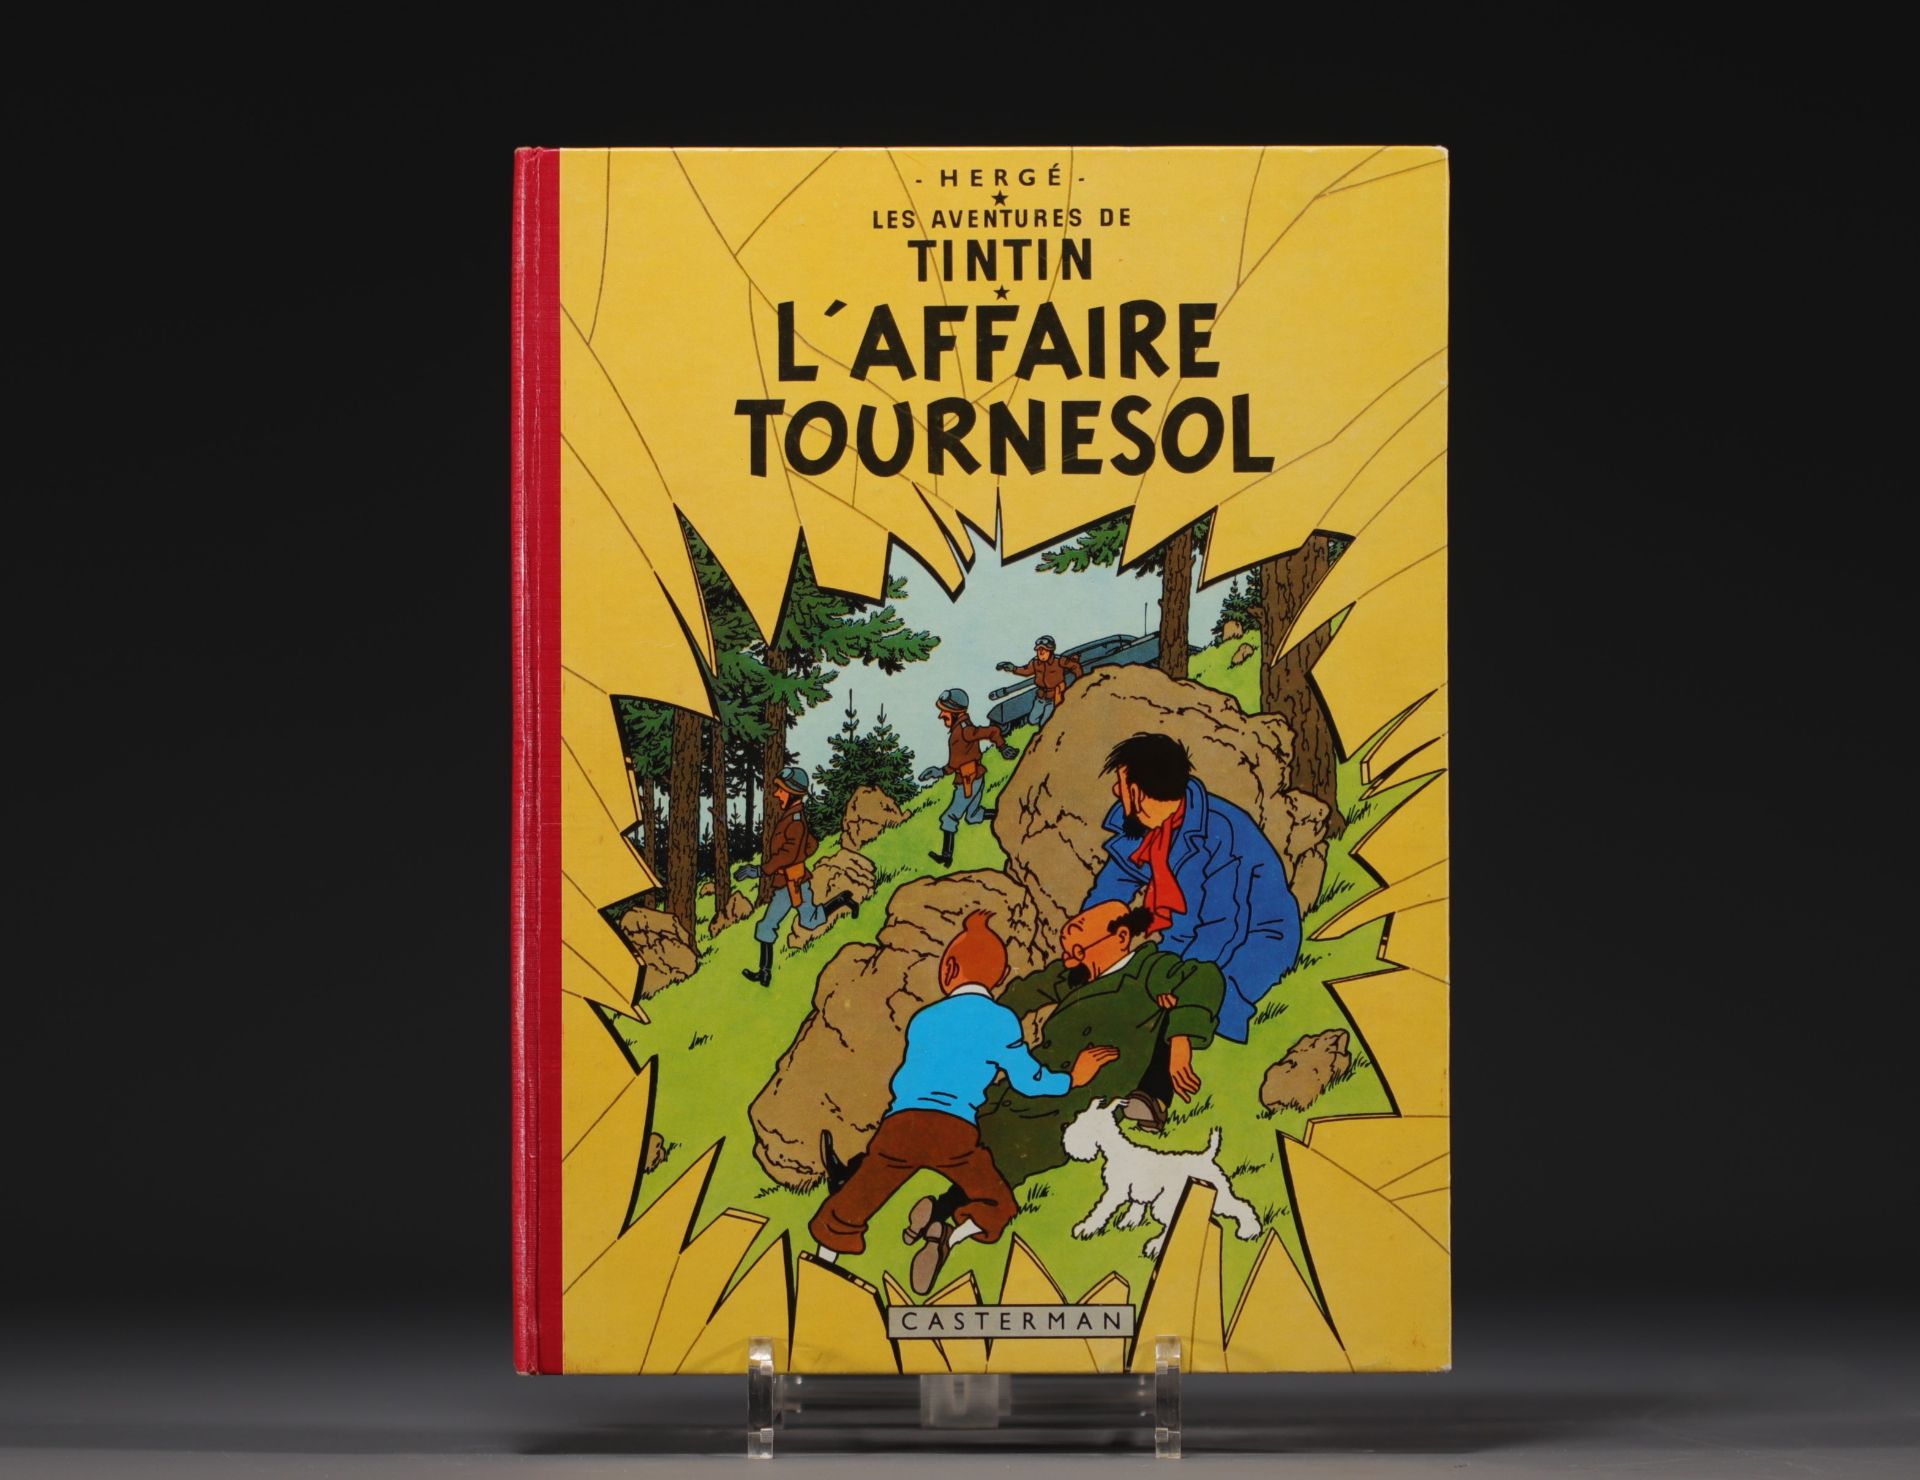 Tintin - Album "L'affaire Tournesol" 1956 edition.